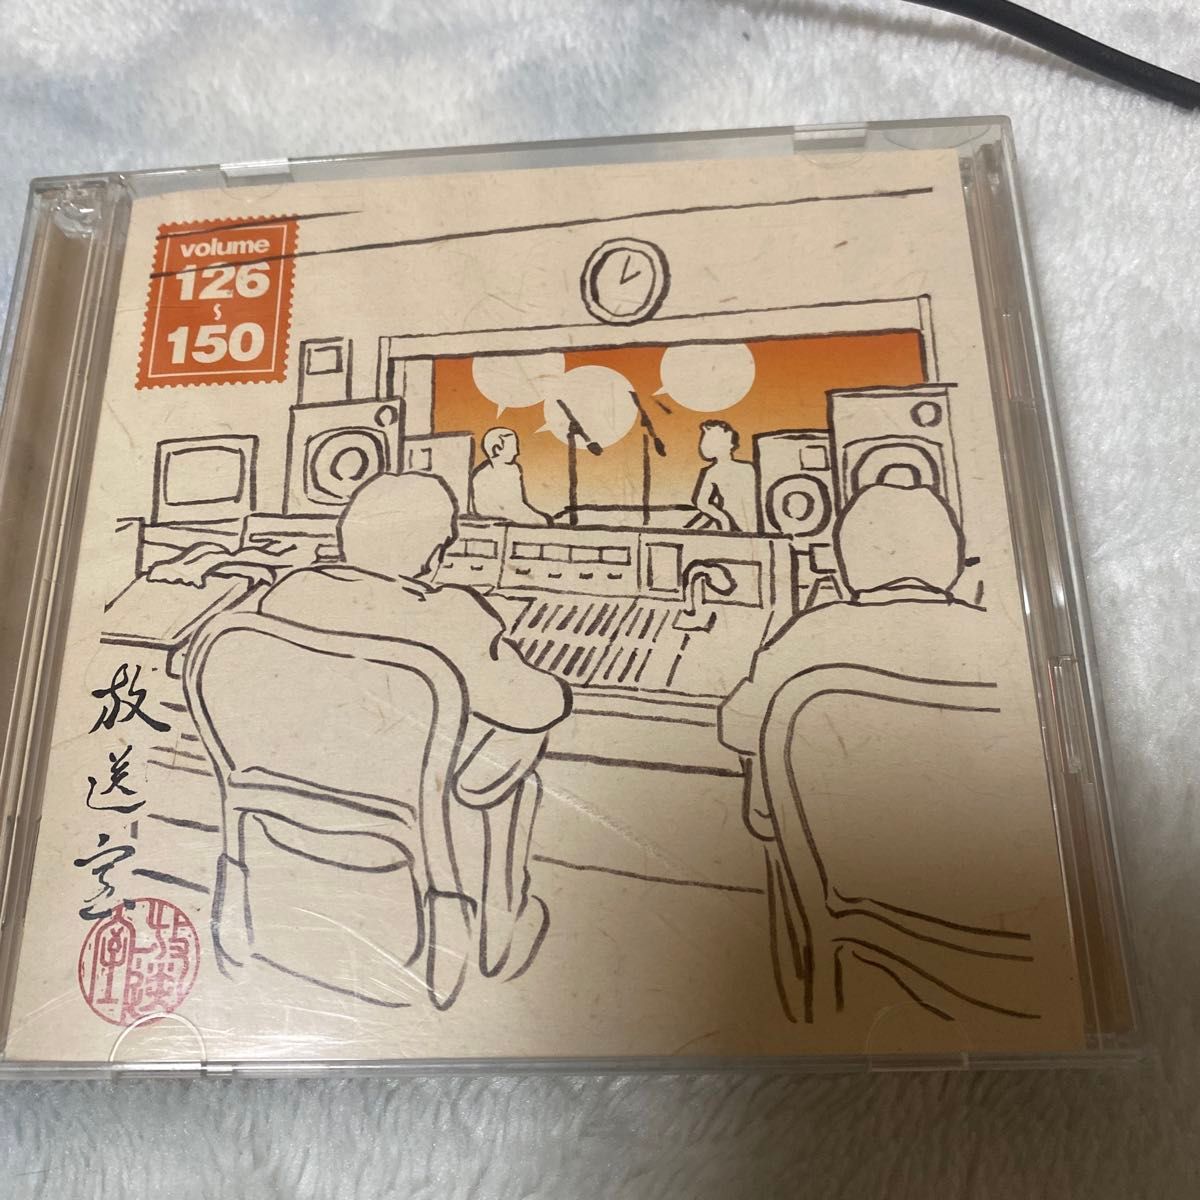 松本人志/放送室 VOL.126〜150 （CD-ROM ※MP3） [CD-ROM]